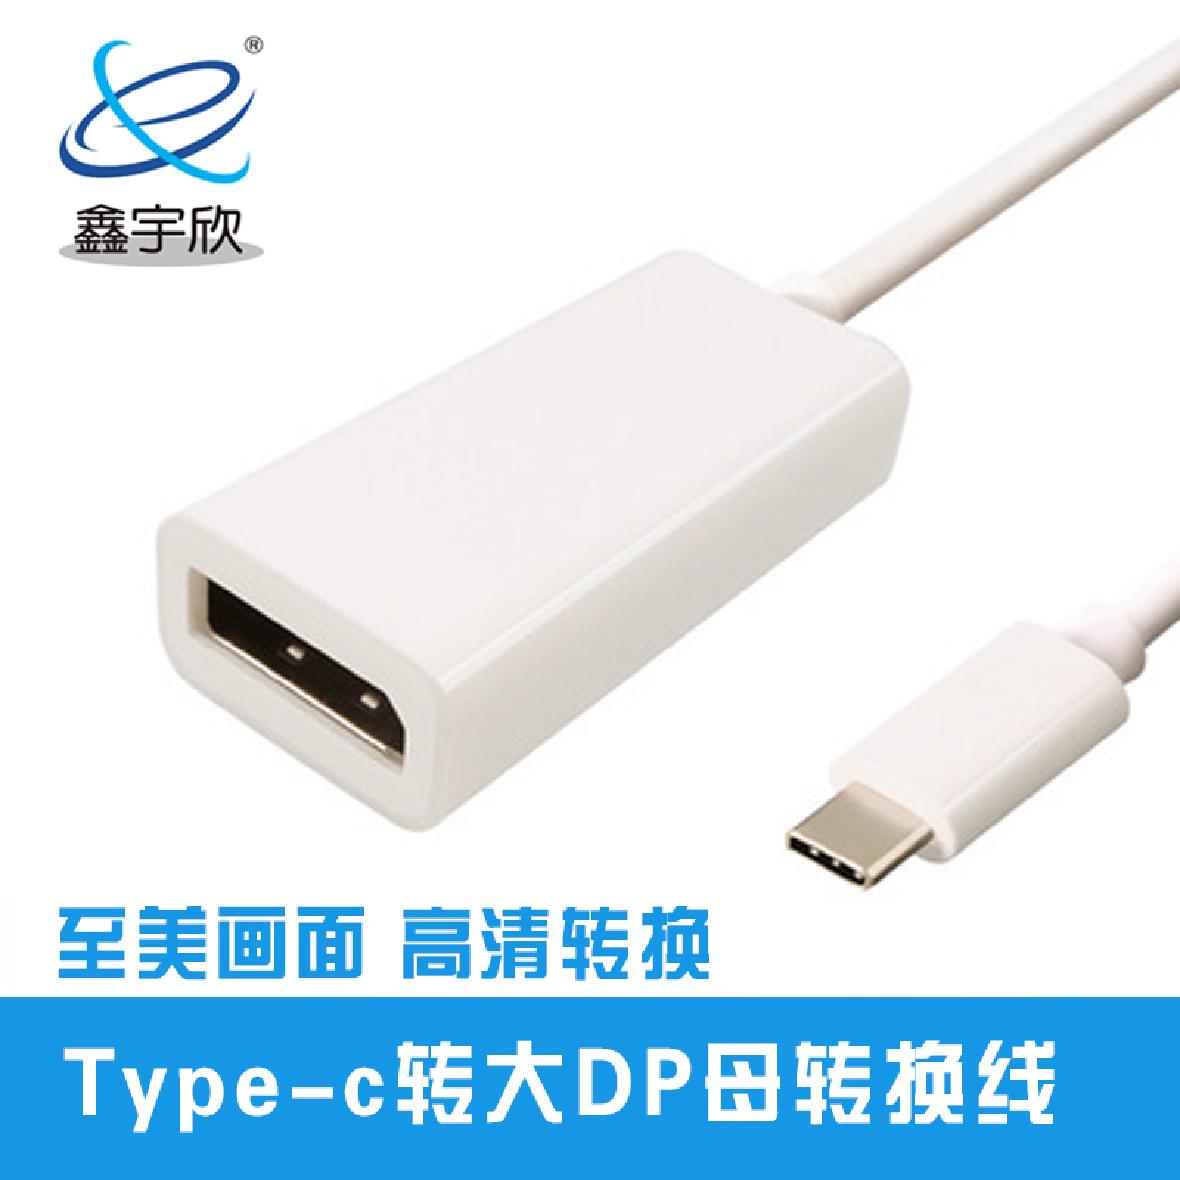  Type-C转大DP高清转换器 TYPE-C USB3.1转DP母转换线 白色塑胶壳